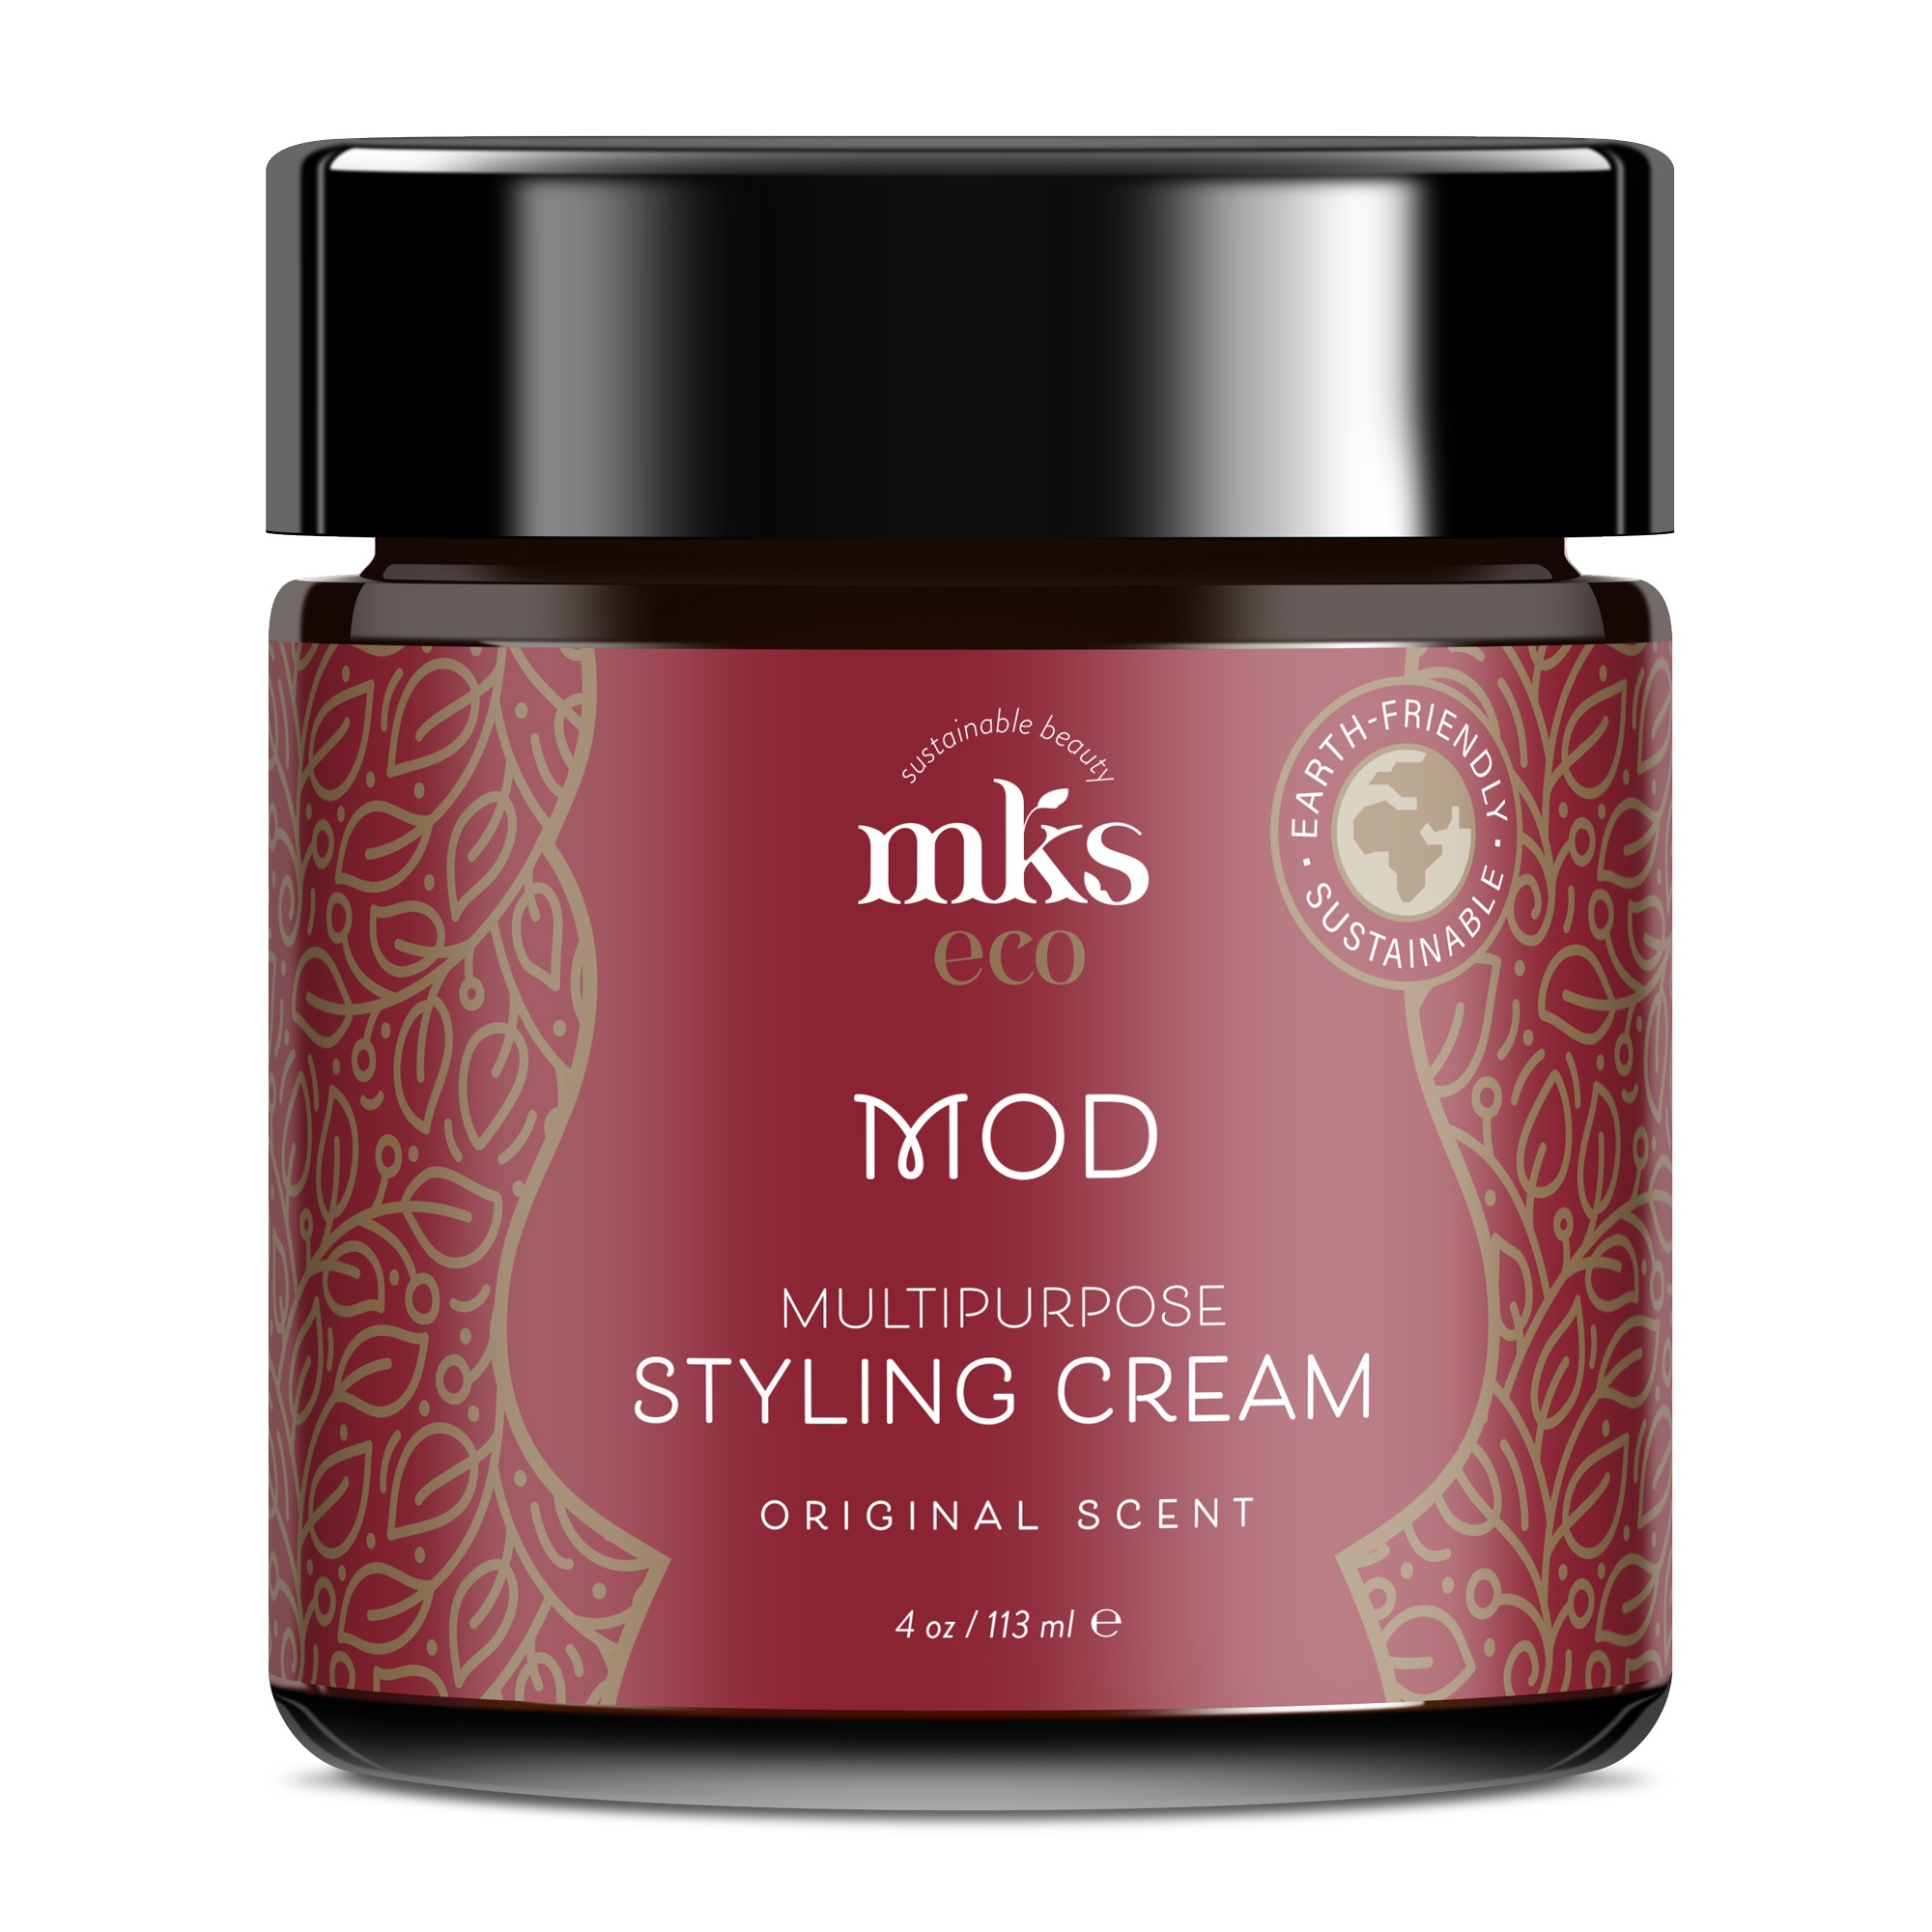 MKS eco Styling: Mod Multipurpose Styling Cream - Original Scent 4oz